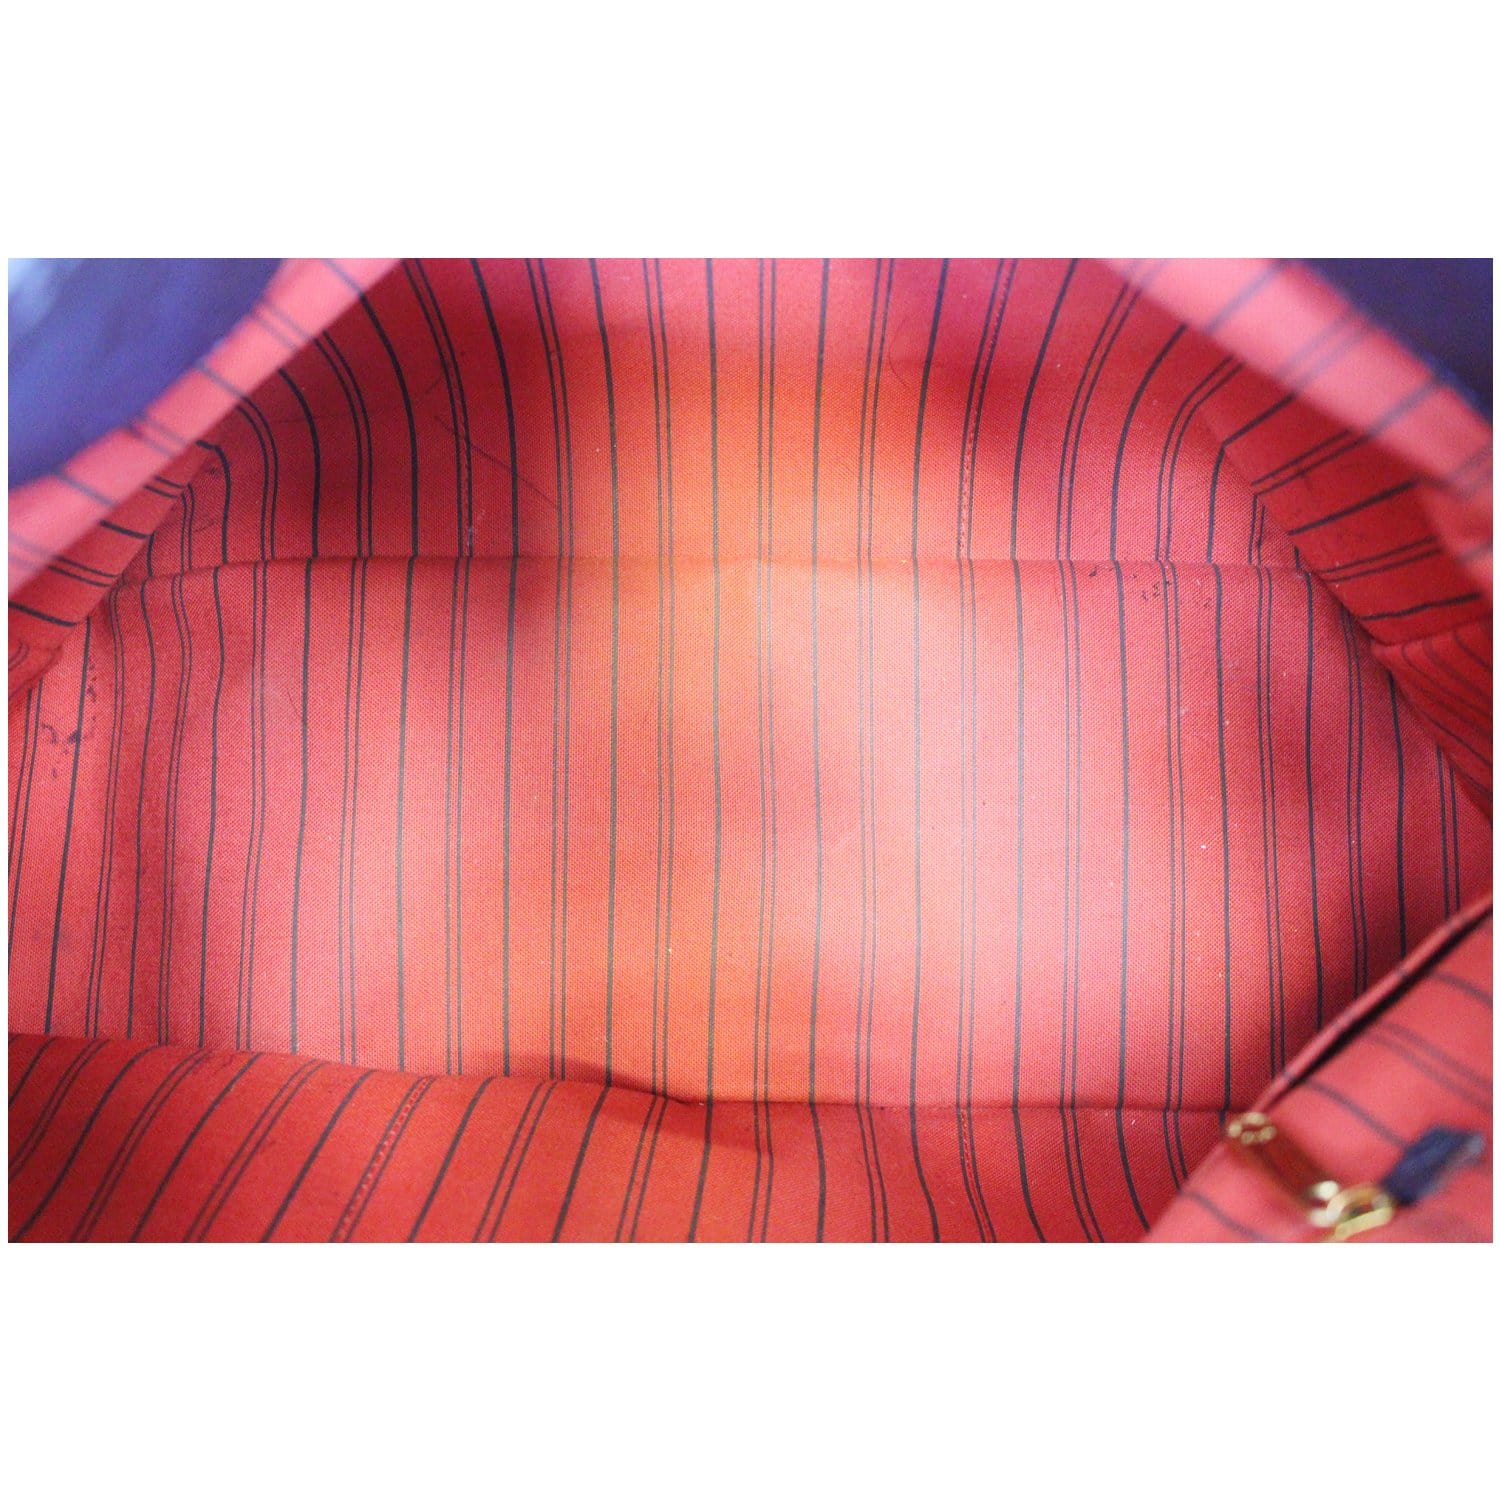 Louis Vuitton Artsy Handbag Monogram Empreinte Leather MM – thankunext.us